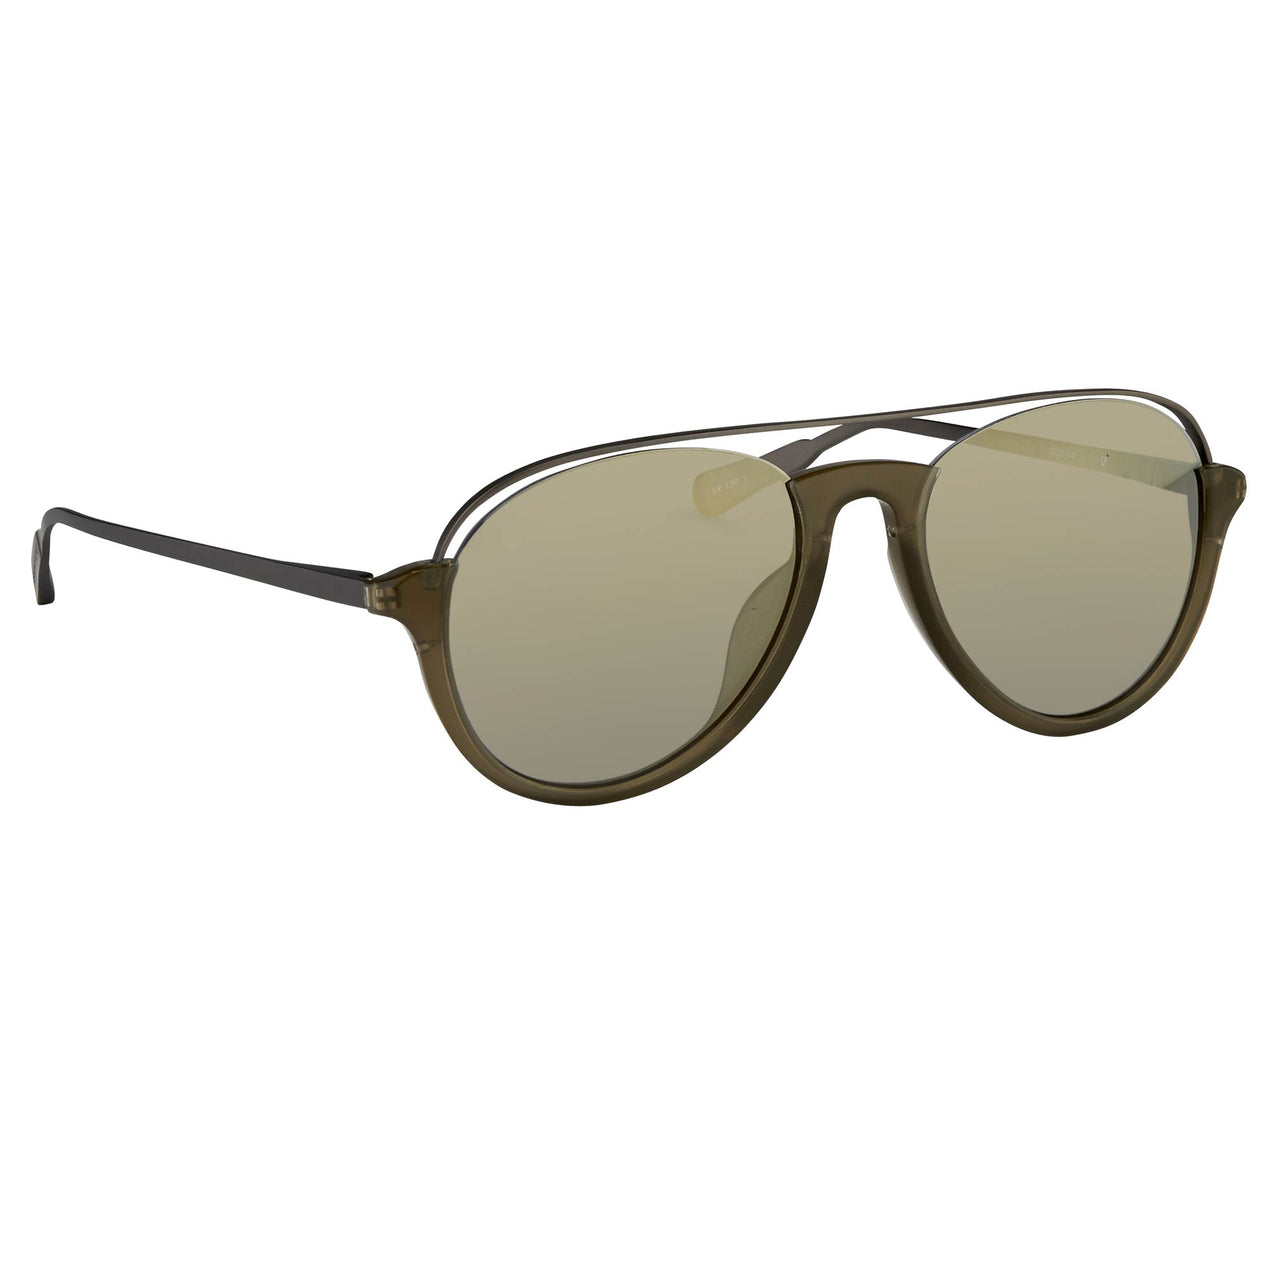 Kris Van Assche Sunglasses Unisex Titanium Khaki Matte Grey and Gold Mirror Lenses Category 3 - KVA84C6SUN - Watches & Crystals